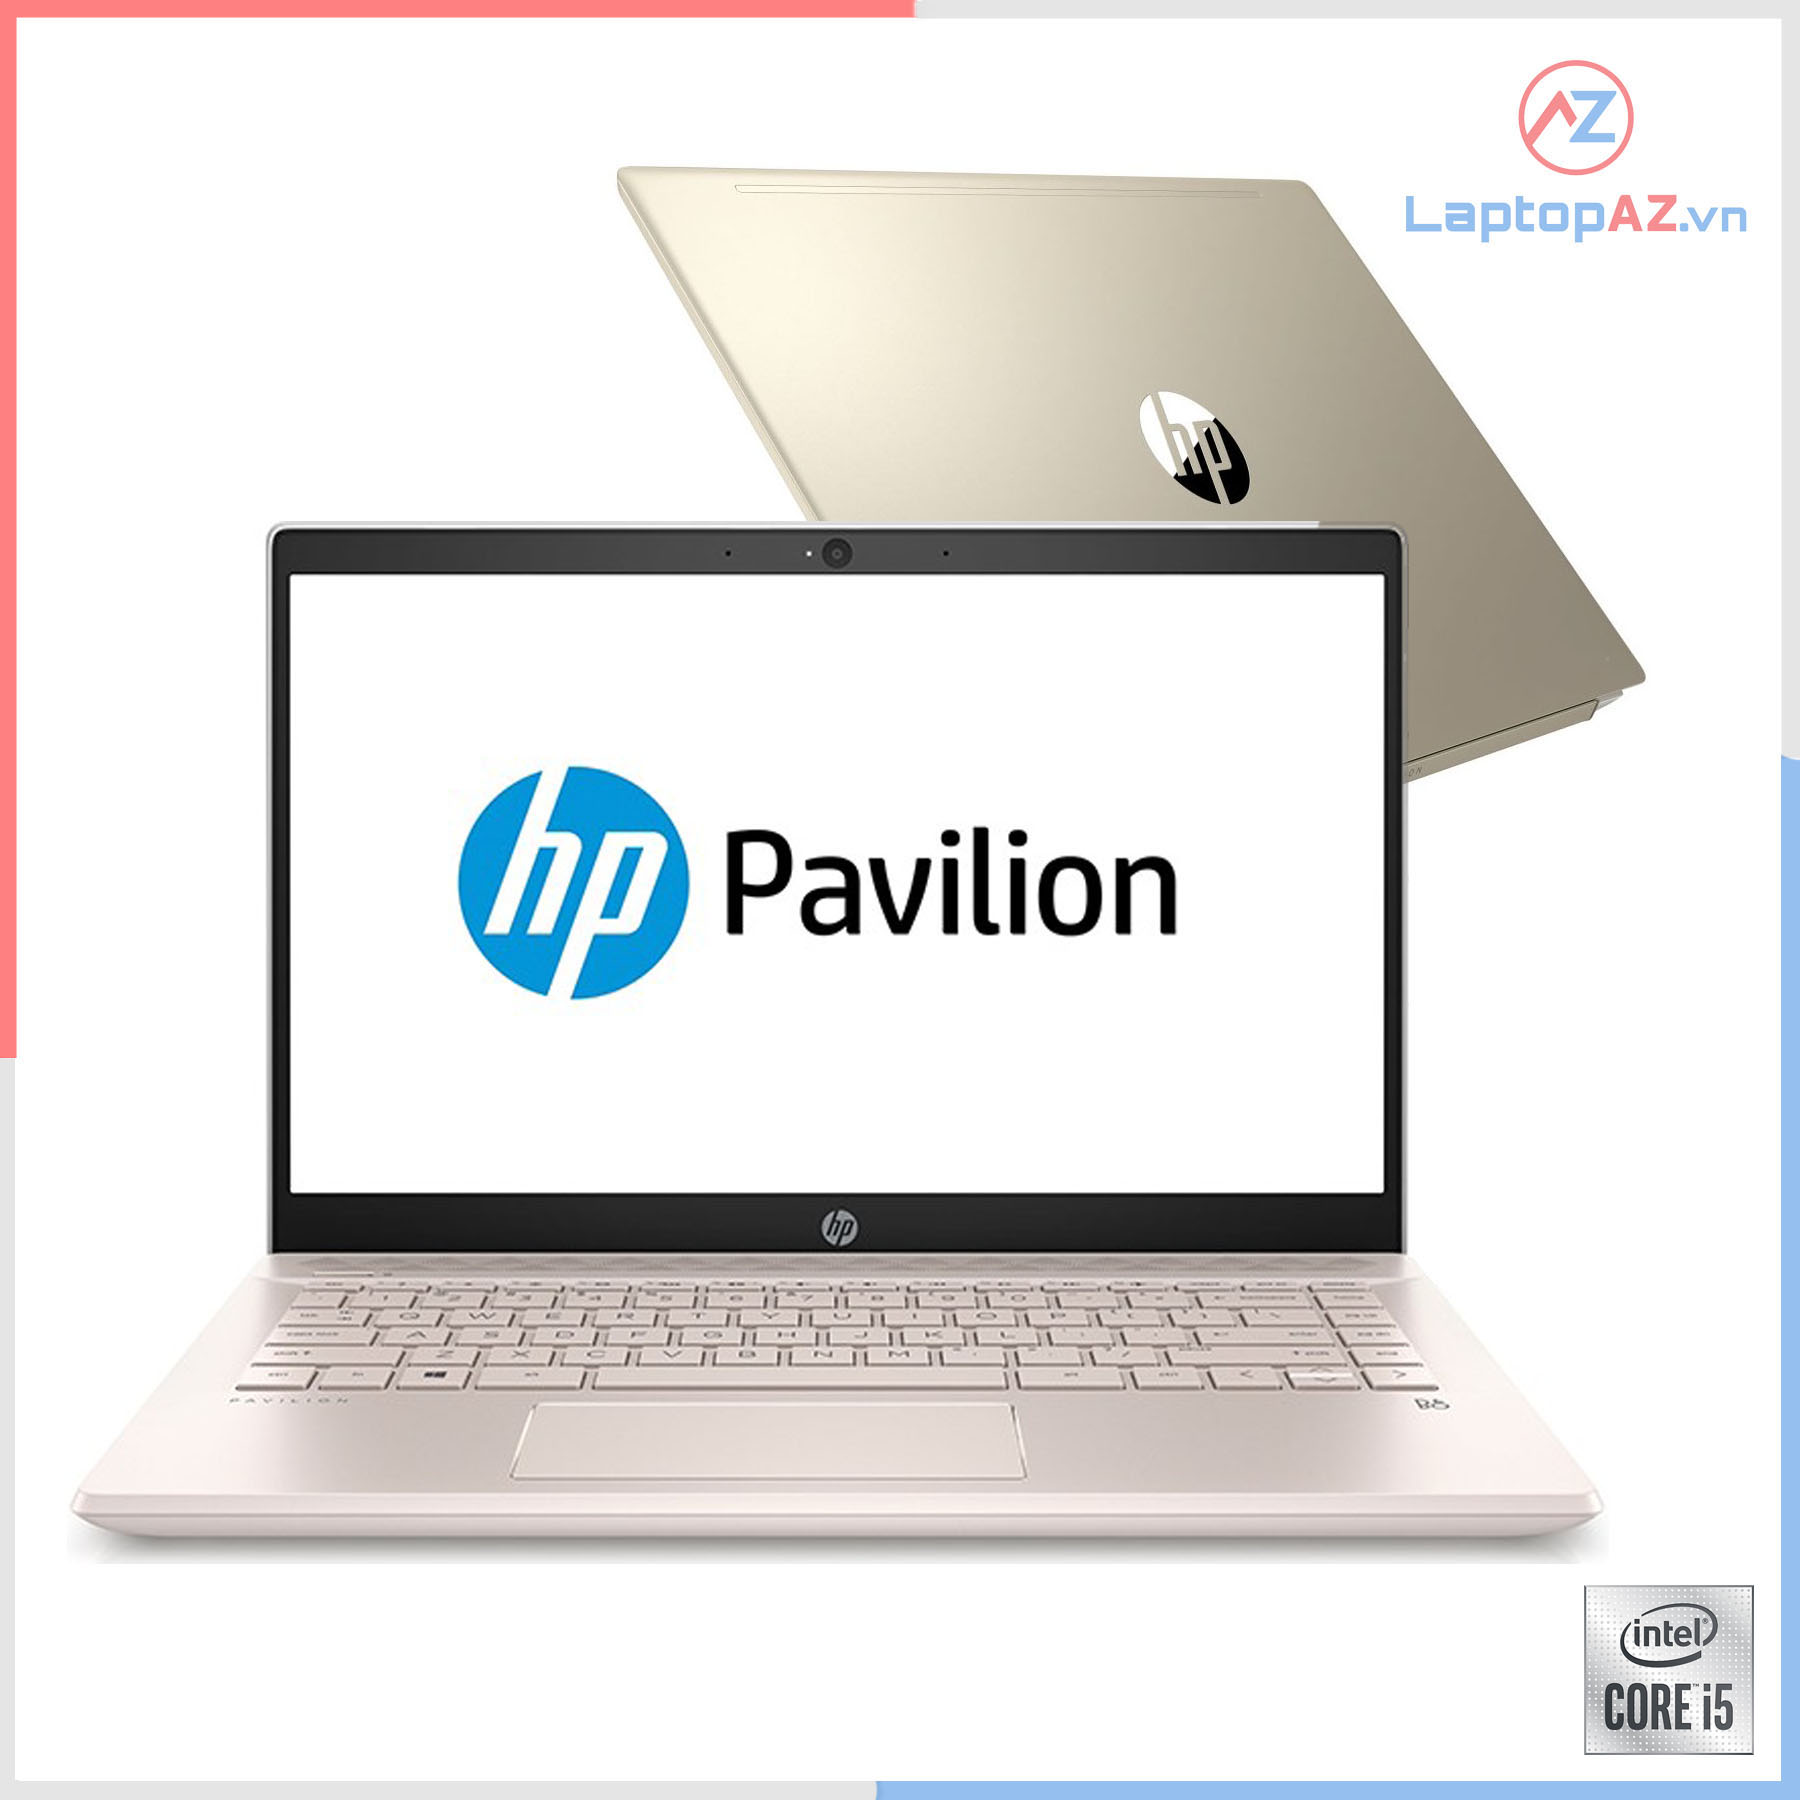 Laptop cũ HP Pavilion 14 Core i5 7200U, 4GB, 500GB, VGA Intel HD Graphics 620, 14 inch HD)